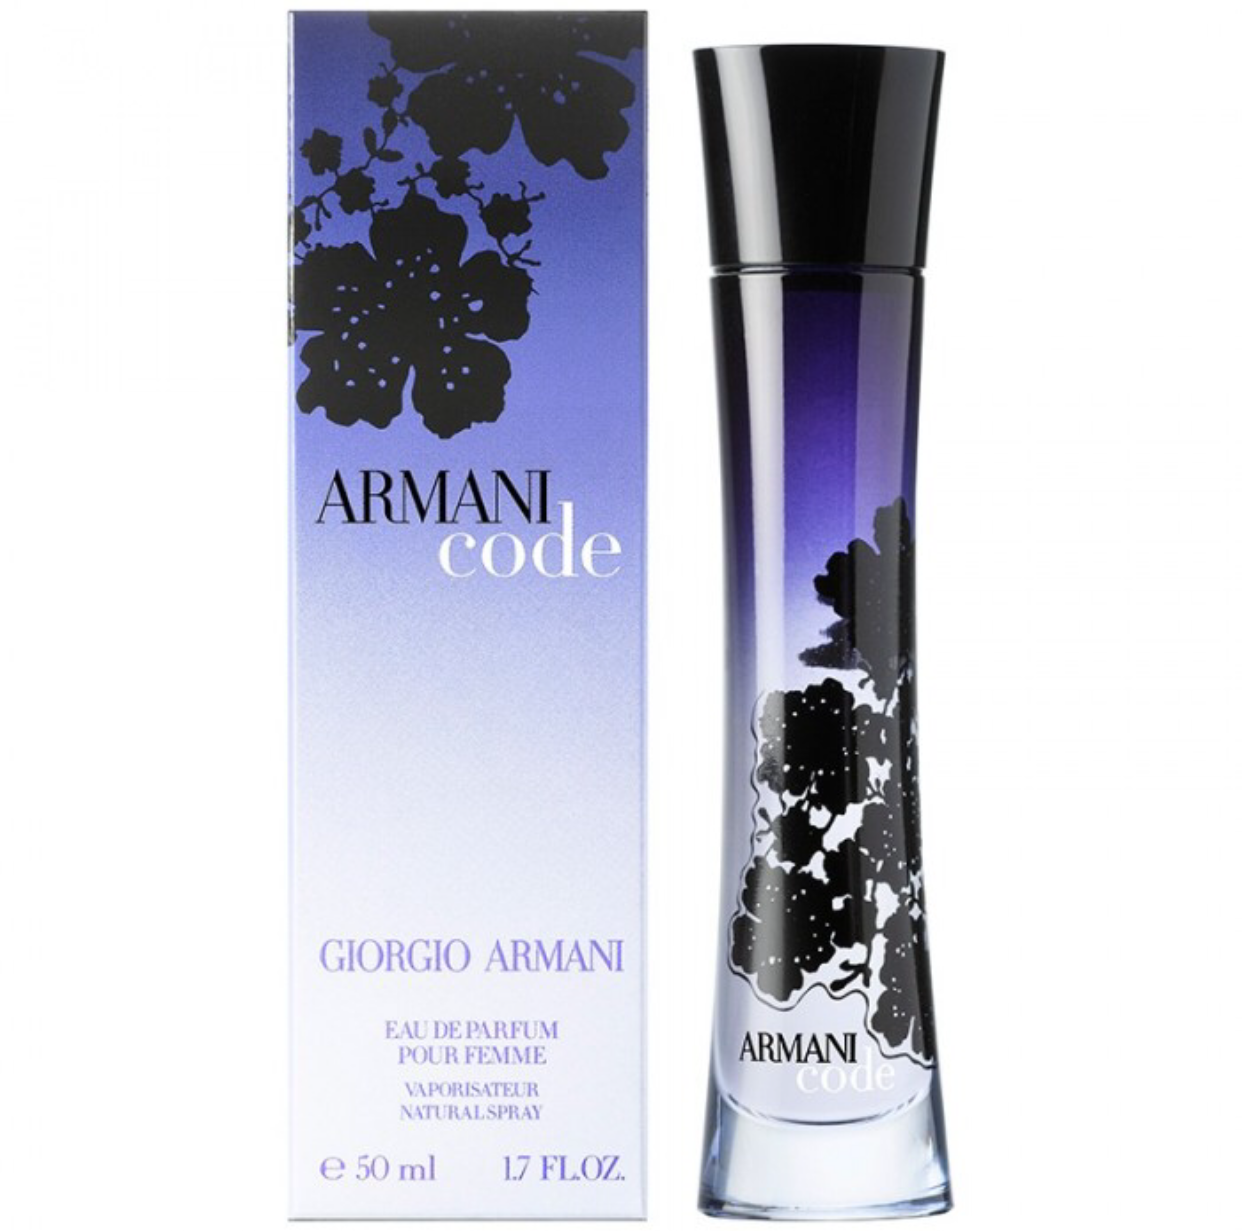 armani code women